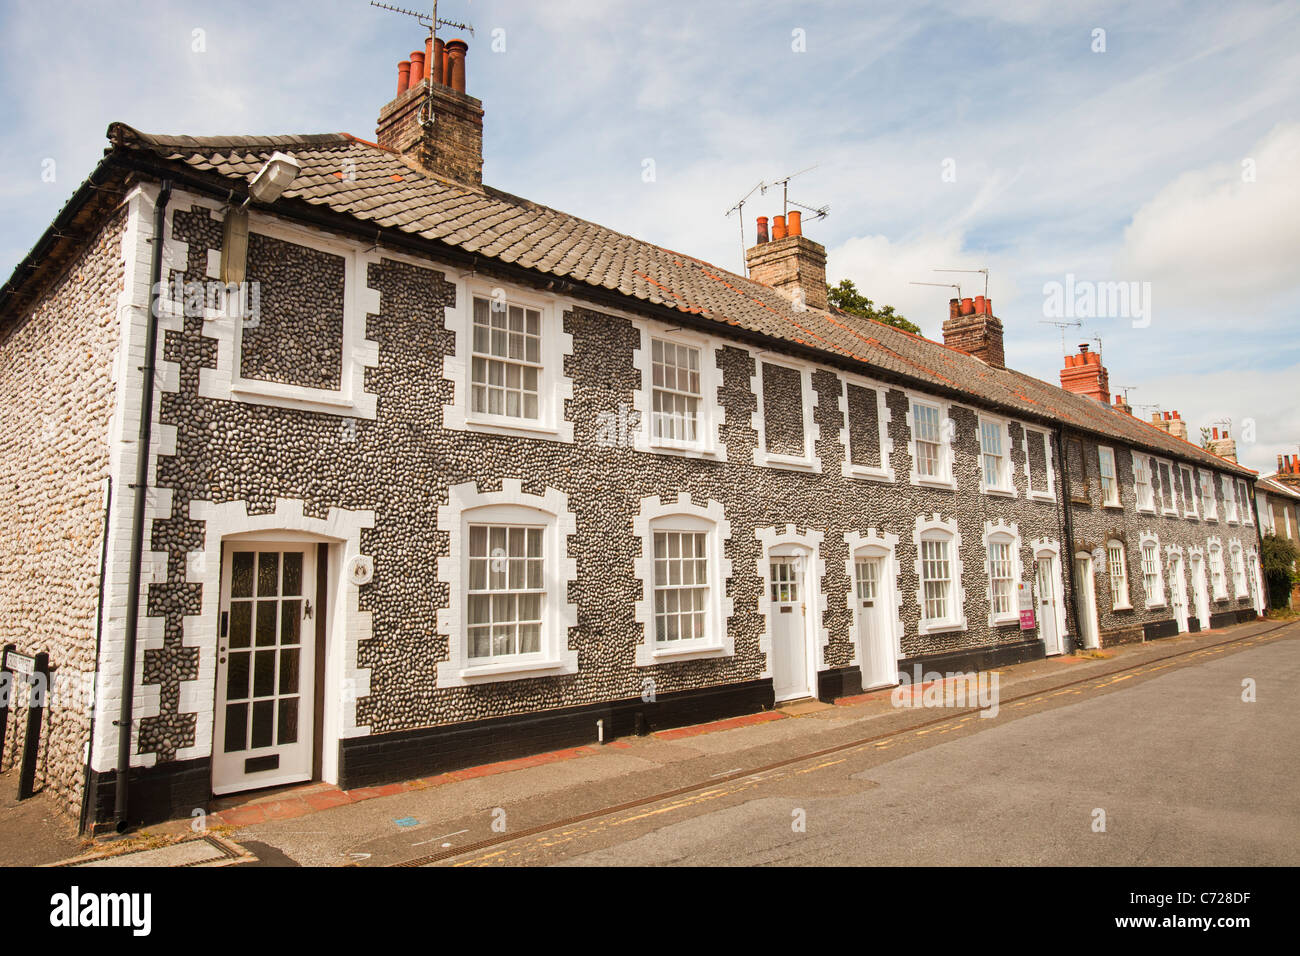 Traditional flint terraced houses in Holt, Norfolk, UK. Stock Photo